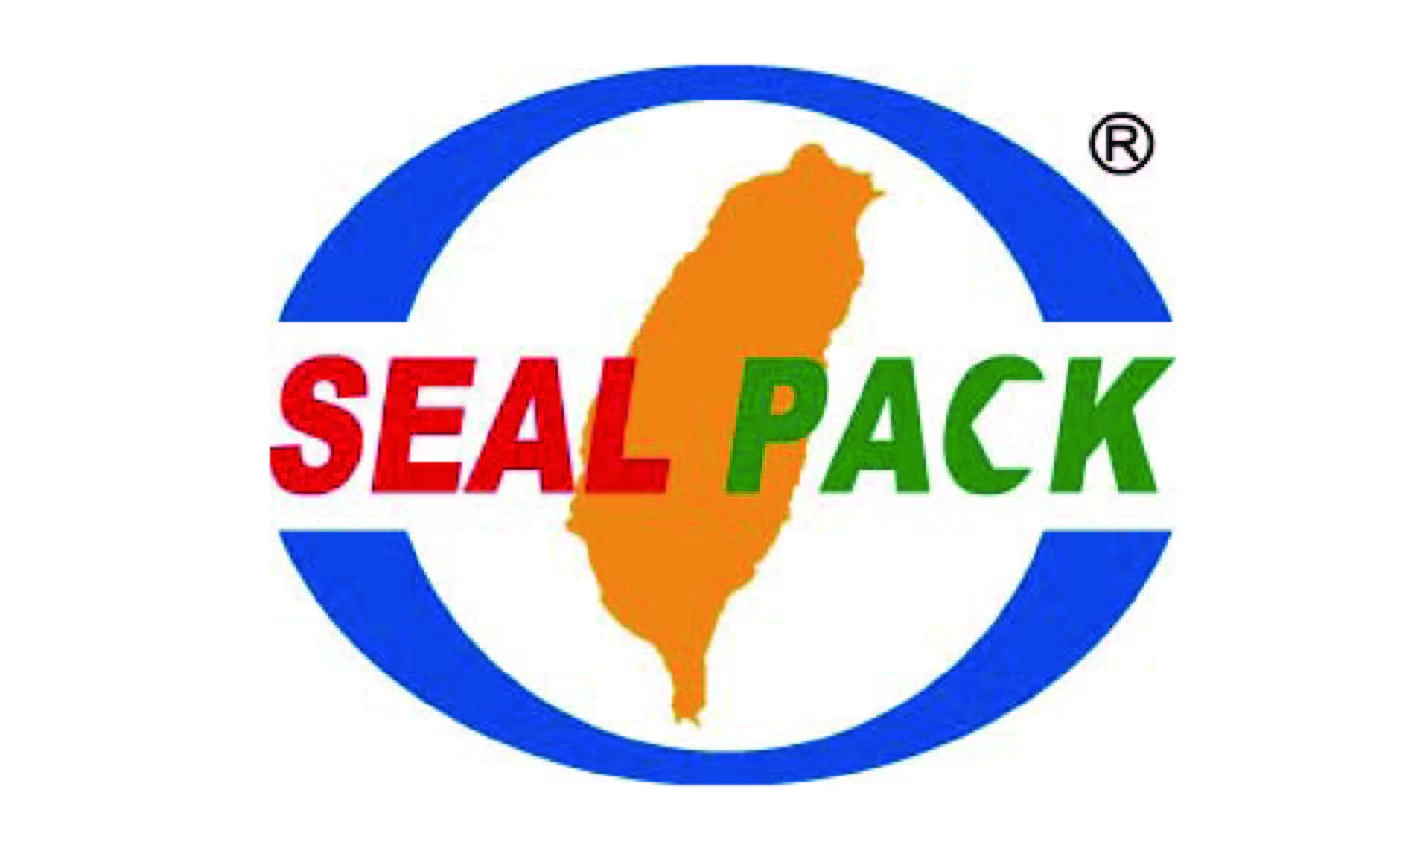 sealpack logo 1